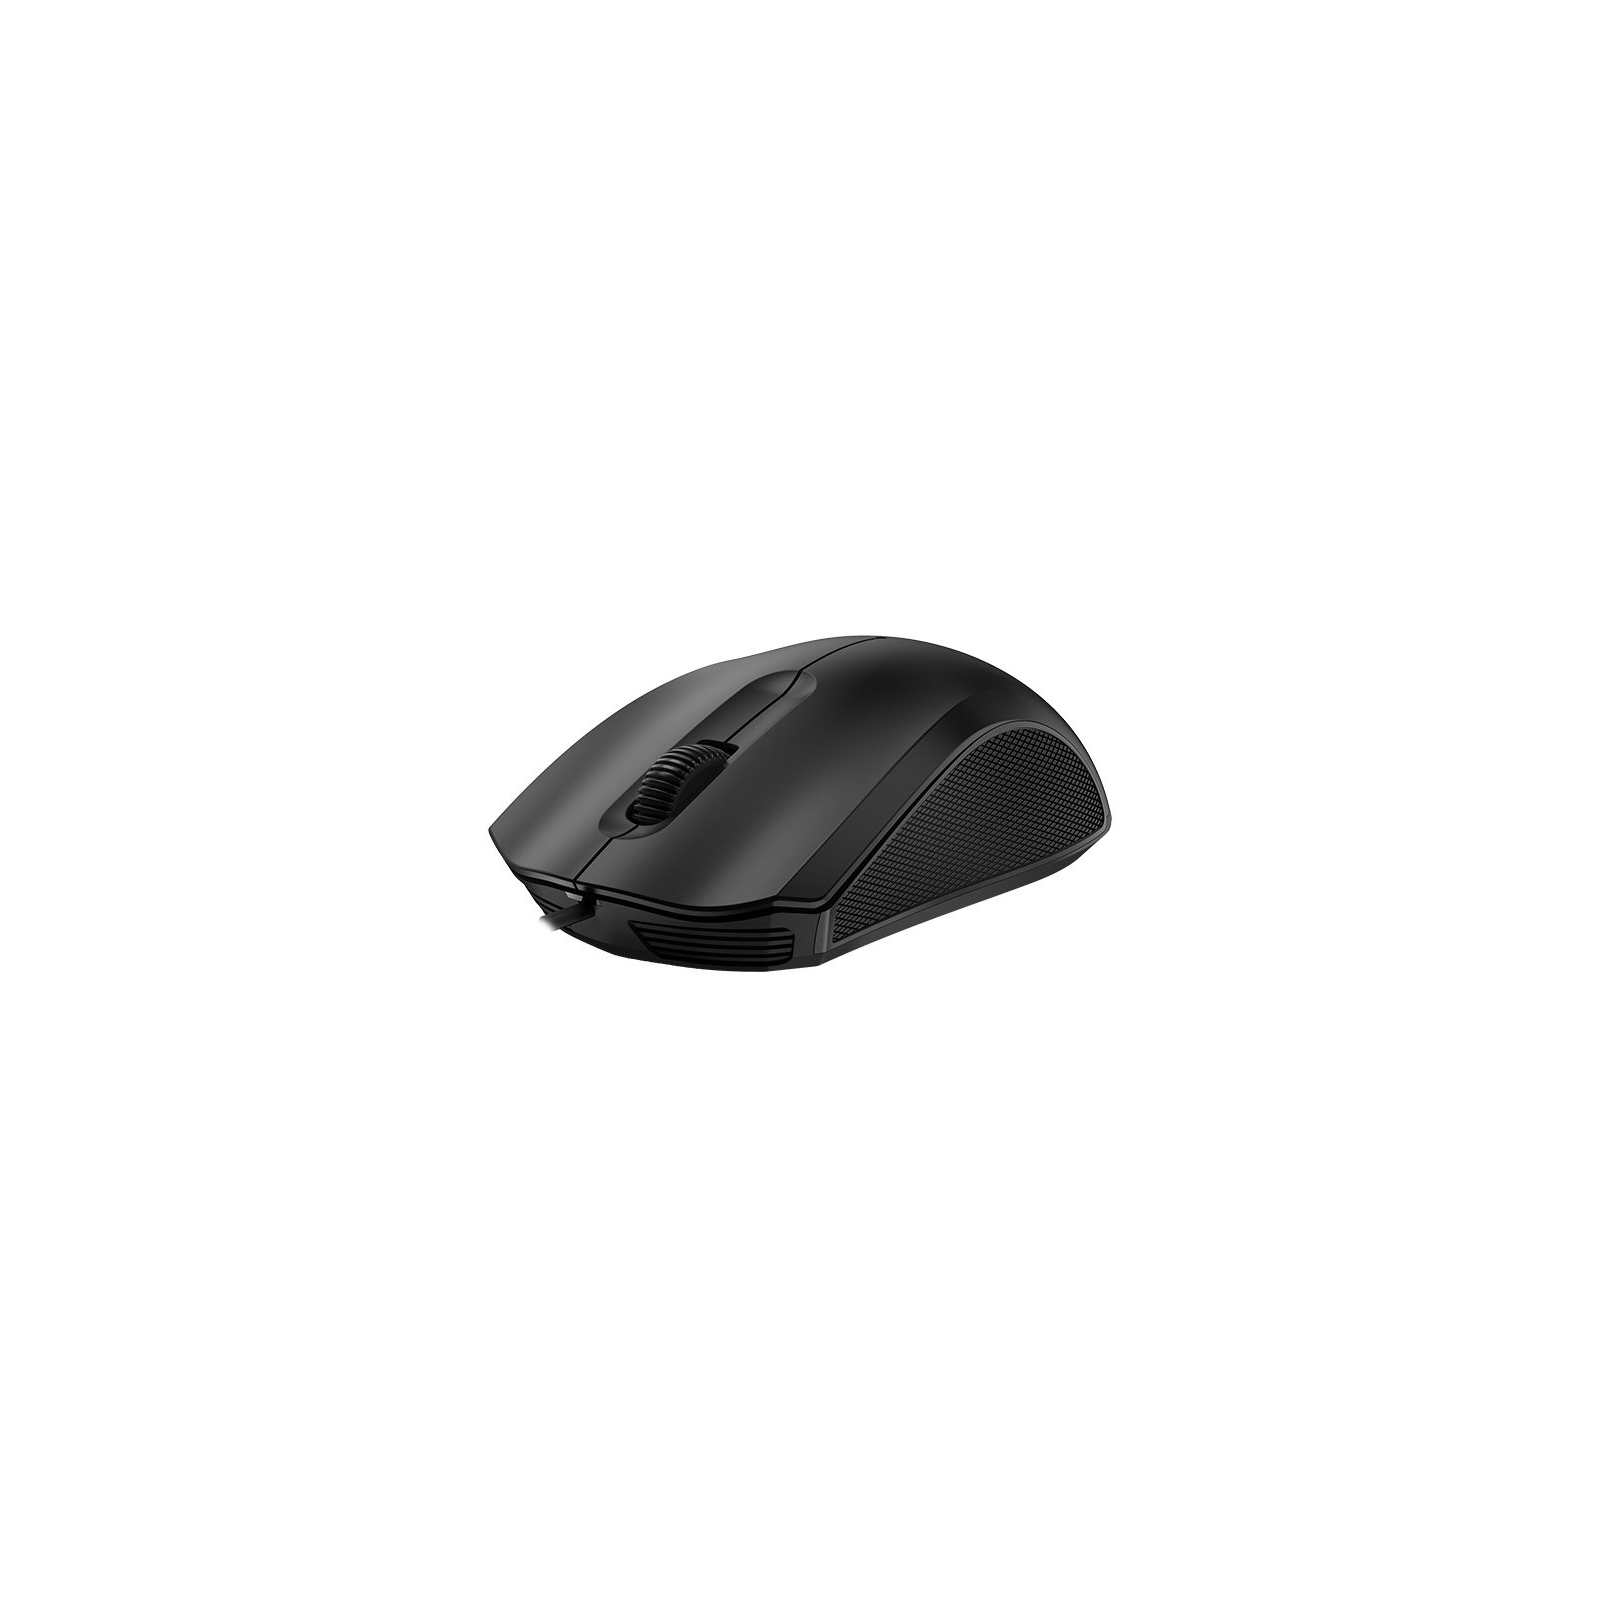 Мышка Genius DX-170 USB Black (31010238100)